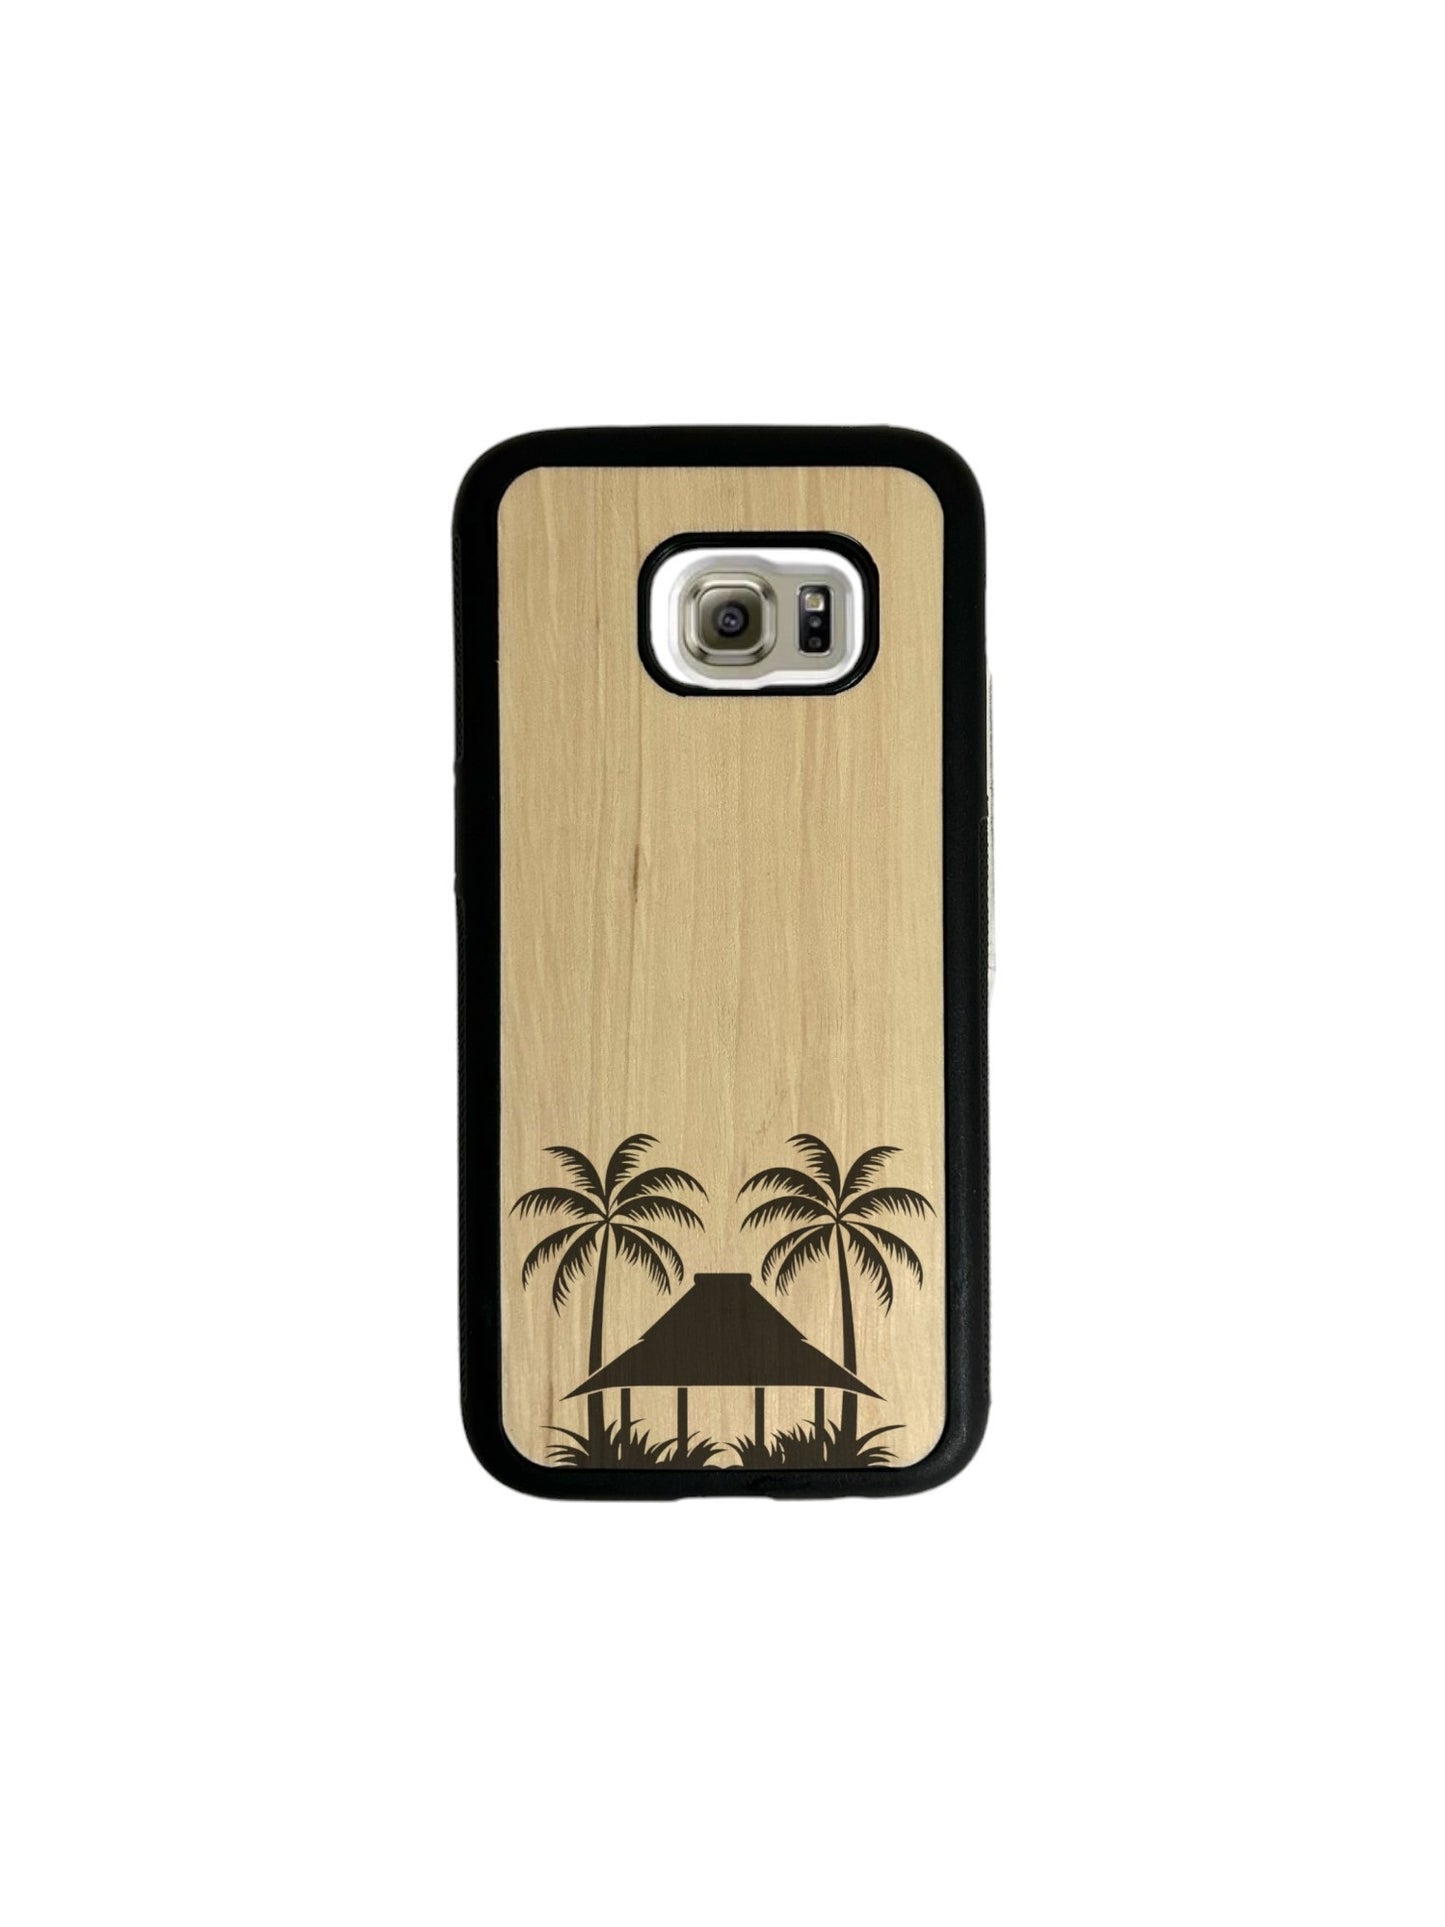 Samsung Galaxy S case - Cabin on the beach